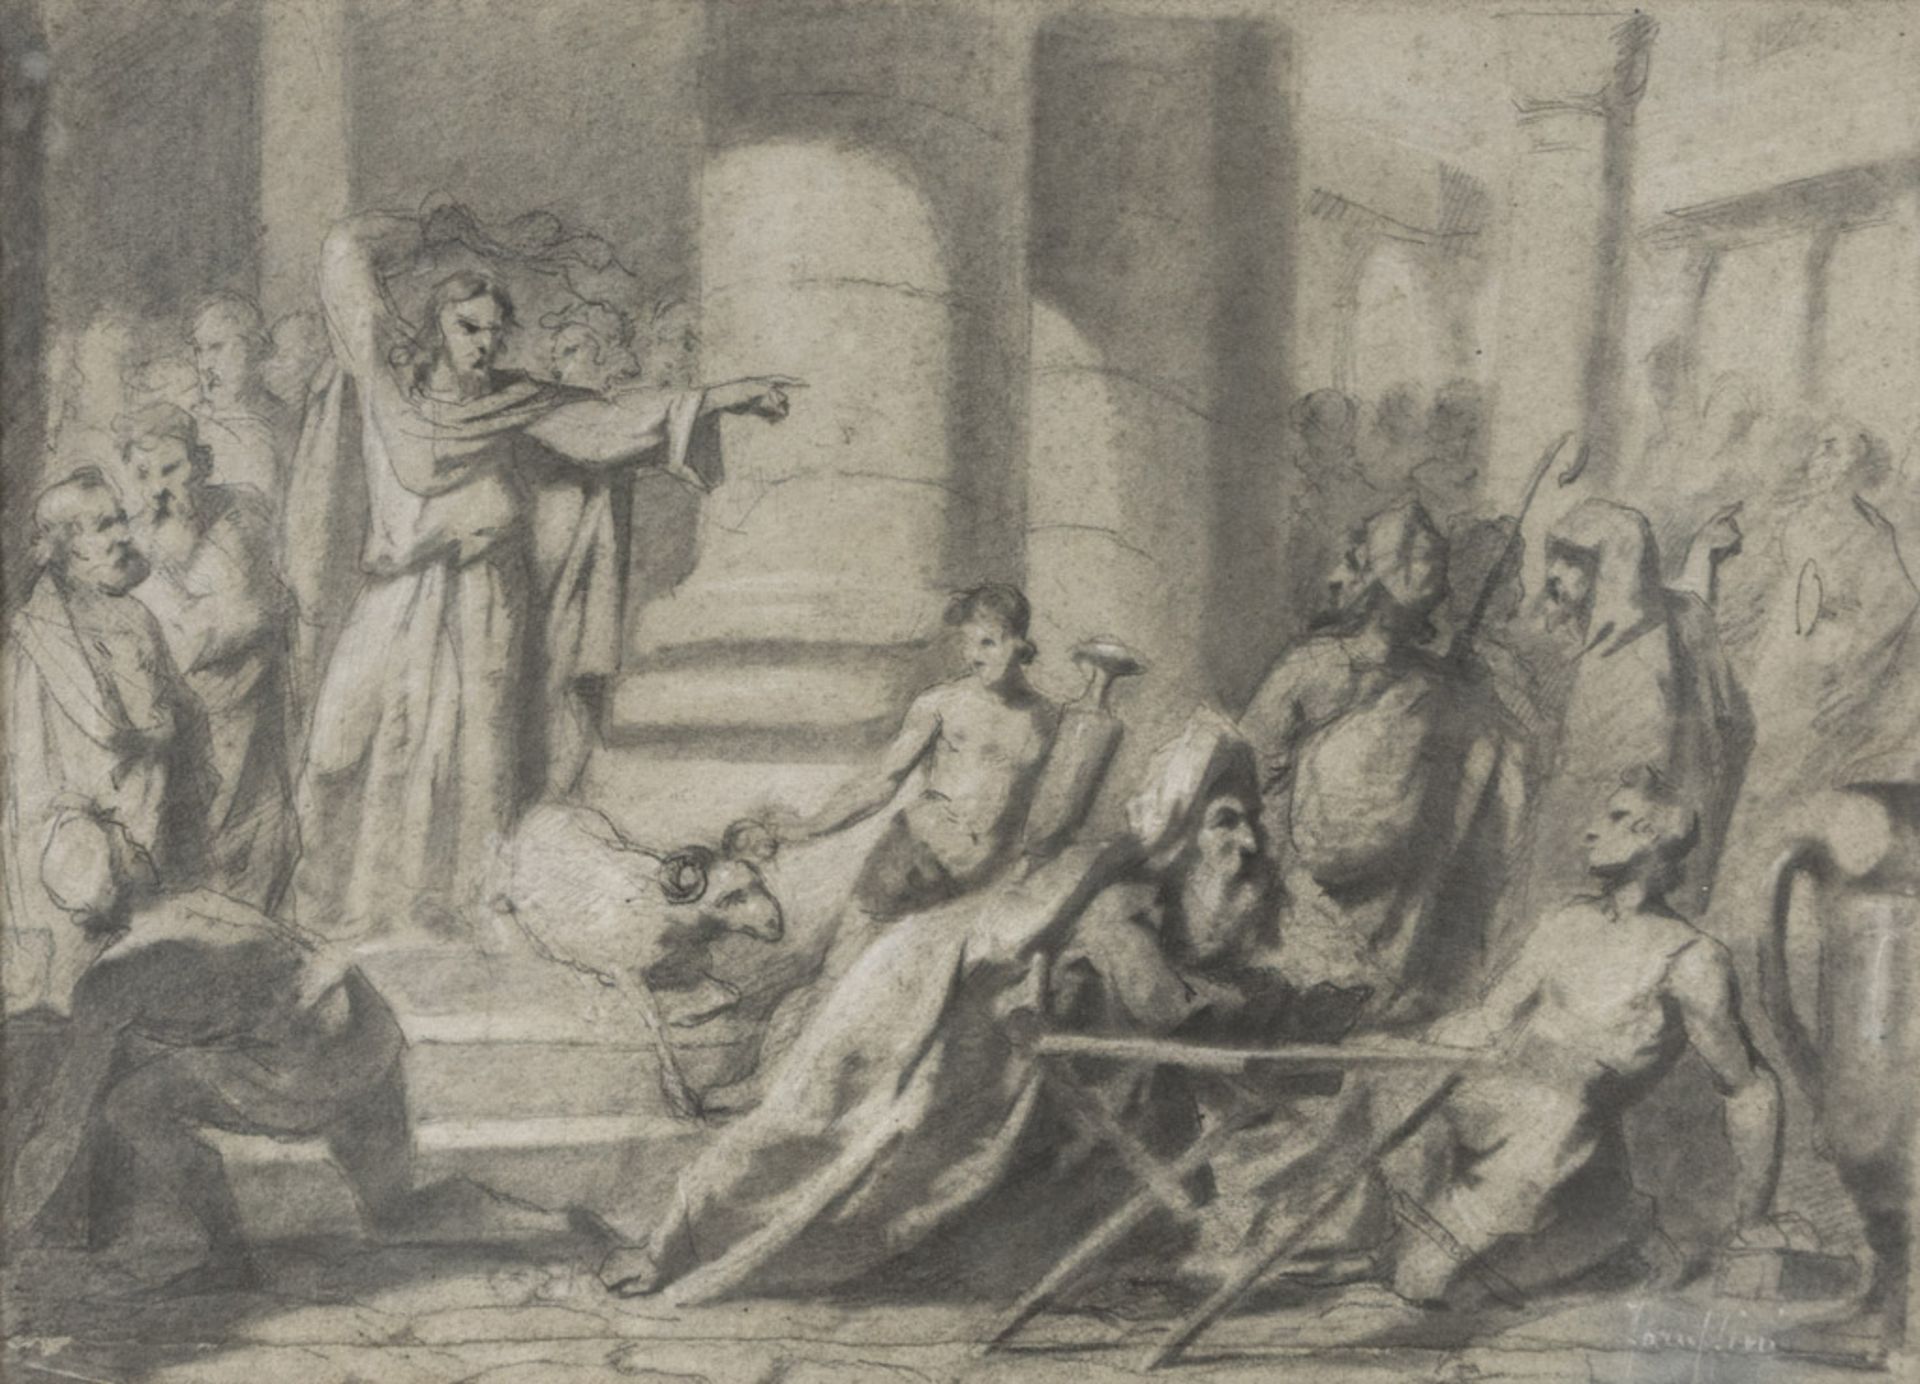 FEDERICO FARUFFINI (Sesto San Giovanni 1831 - Perugia 1869) CHRIST AND THE MERCHANTS Pencil on